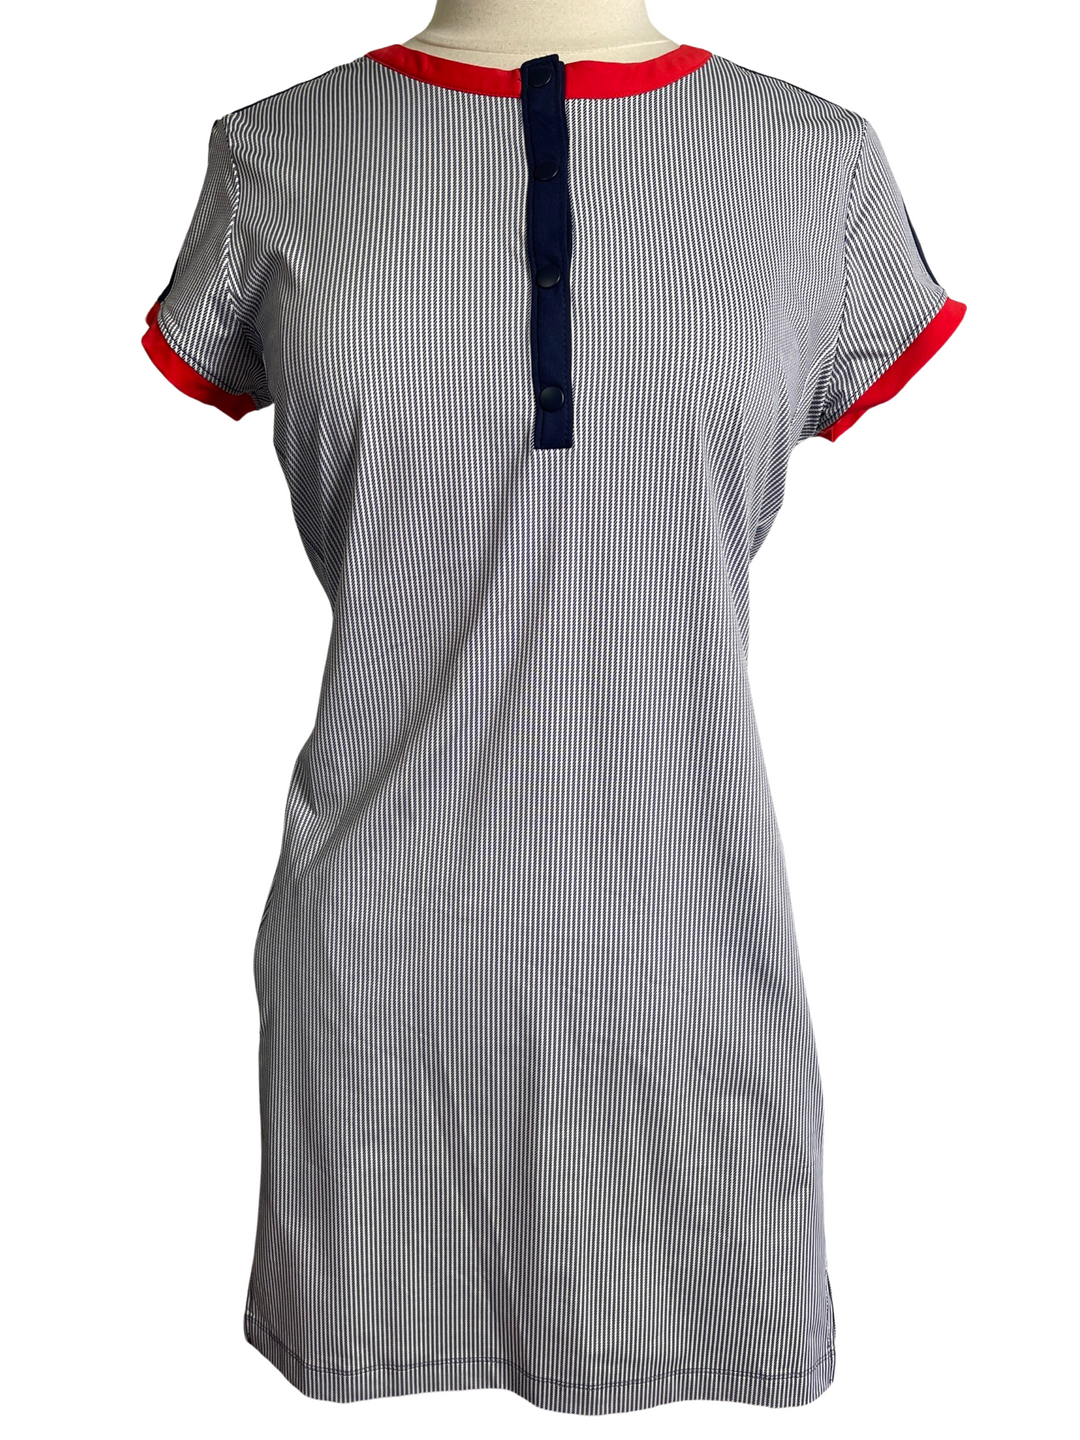 Kinona Short Sleeve Golf Dress- Navy Red and White- Medium - Skorzie